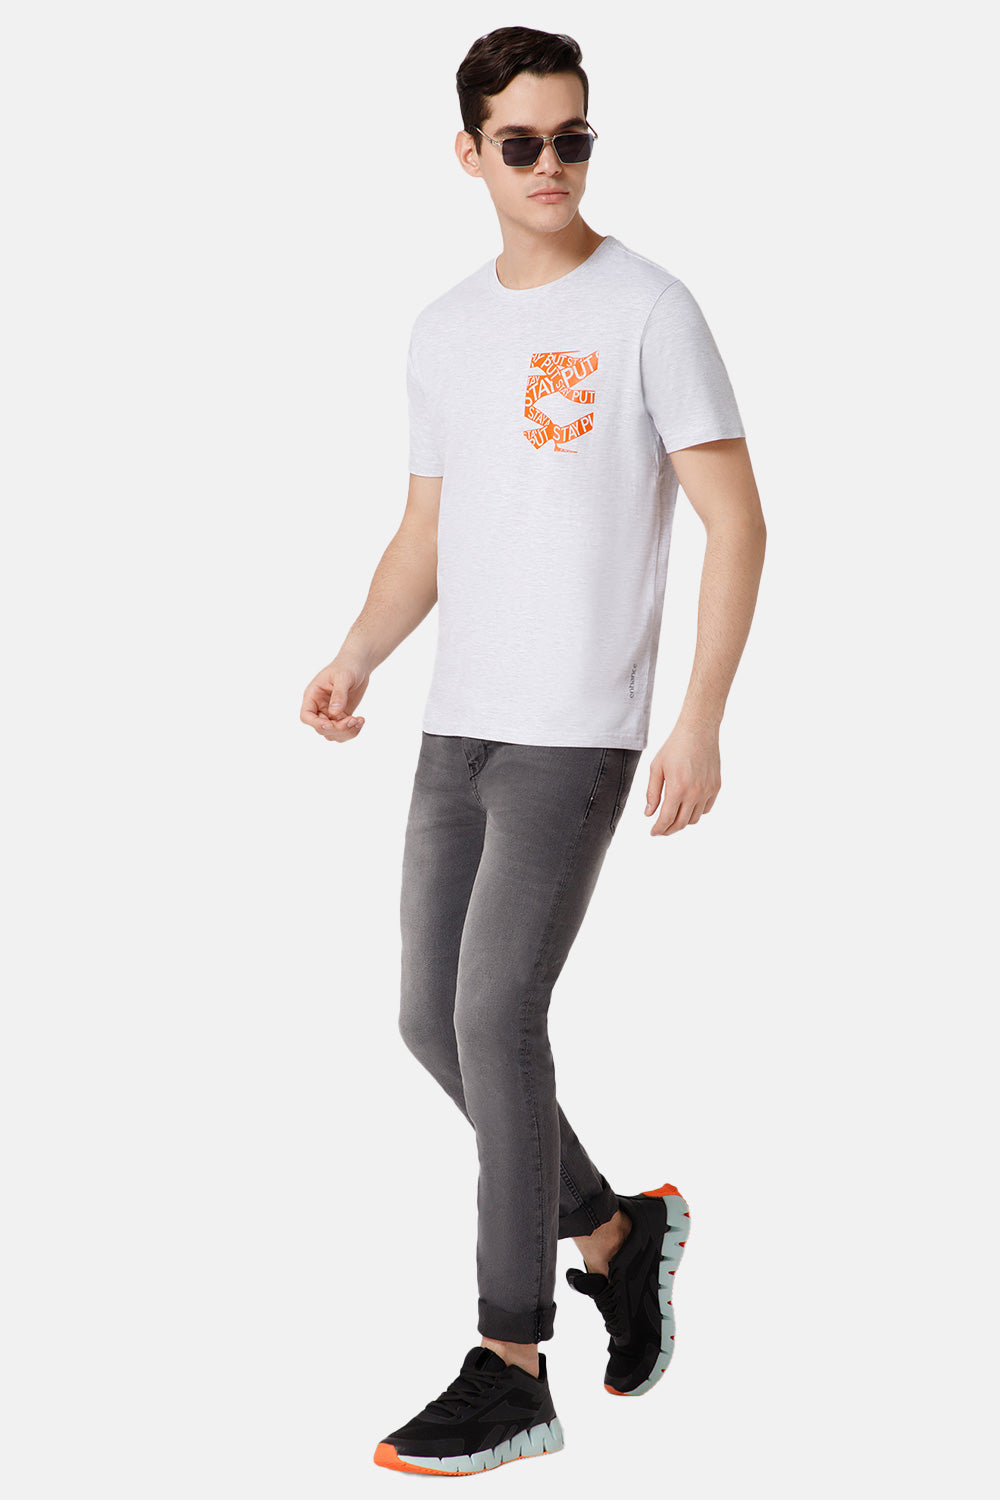 Enhance Printed Crew Neck Men's Casual T-Shirts - Grey - TS33